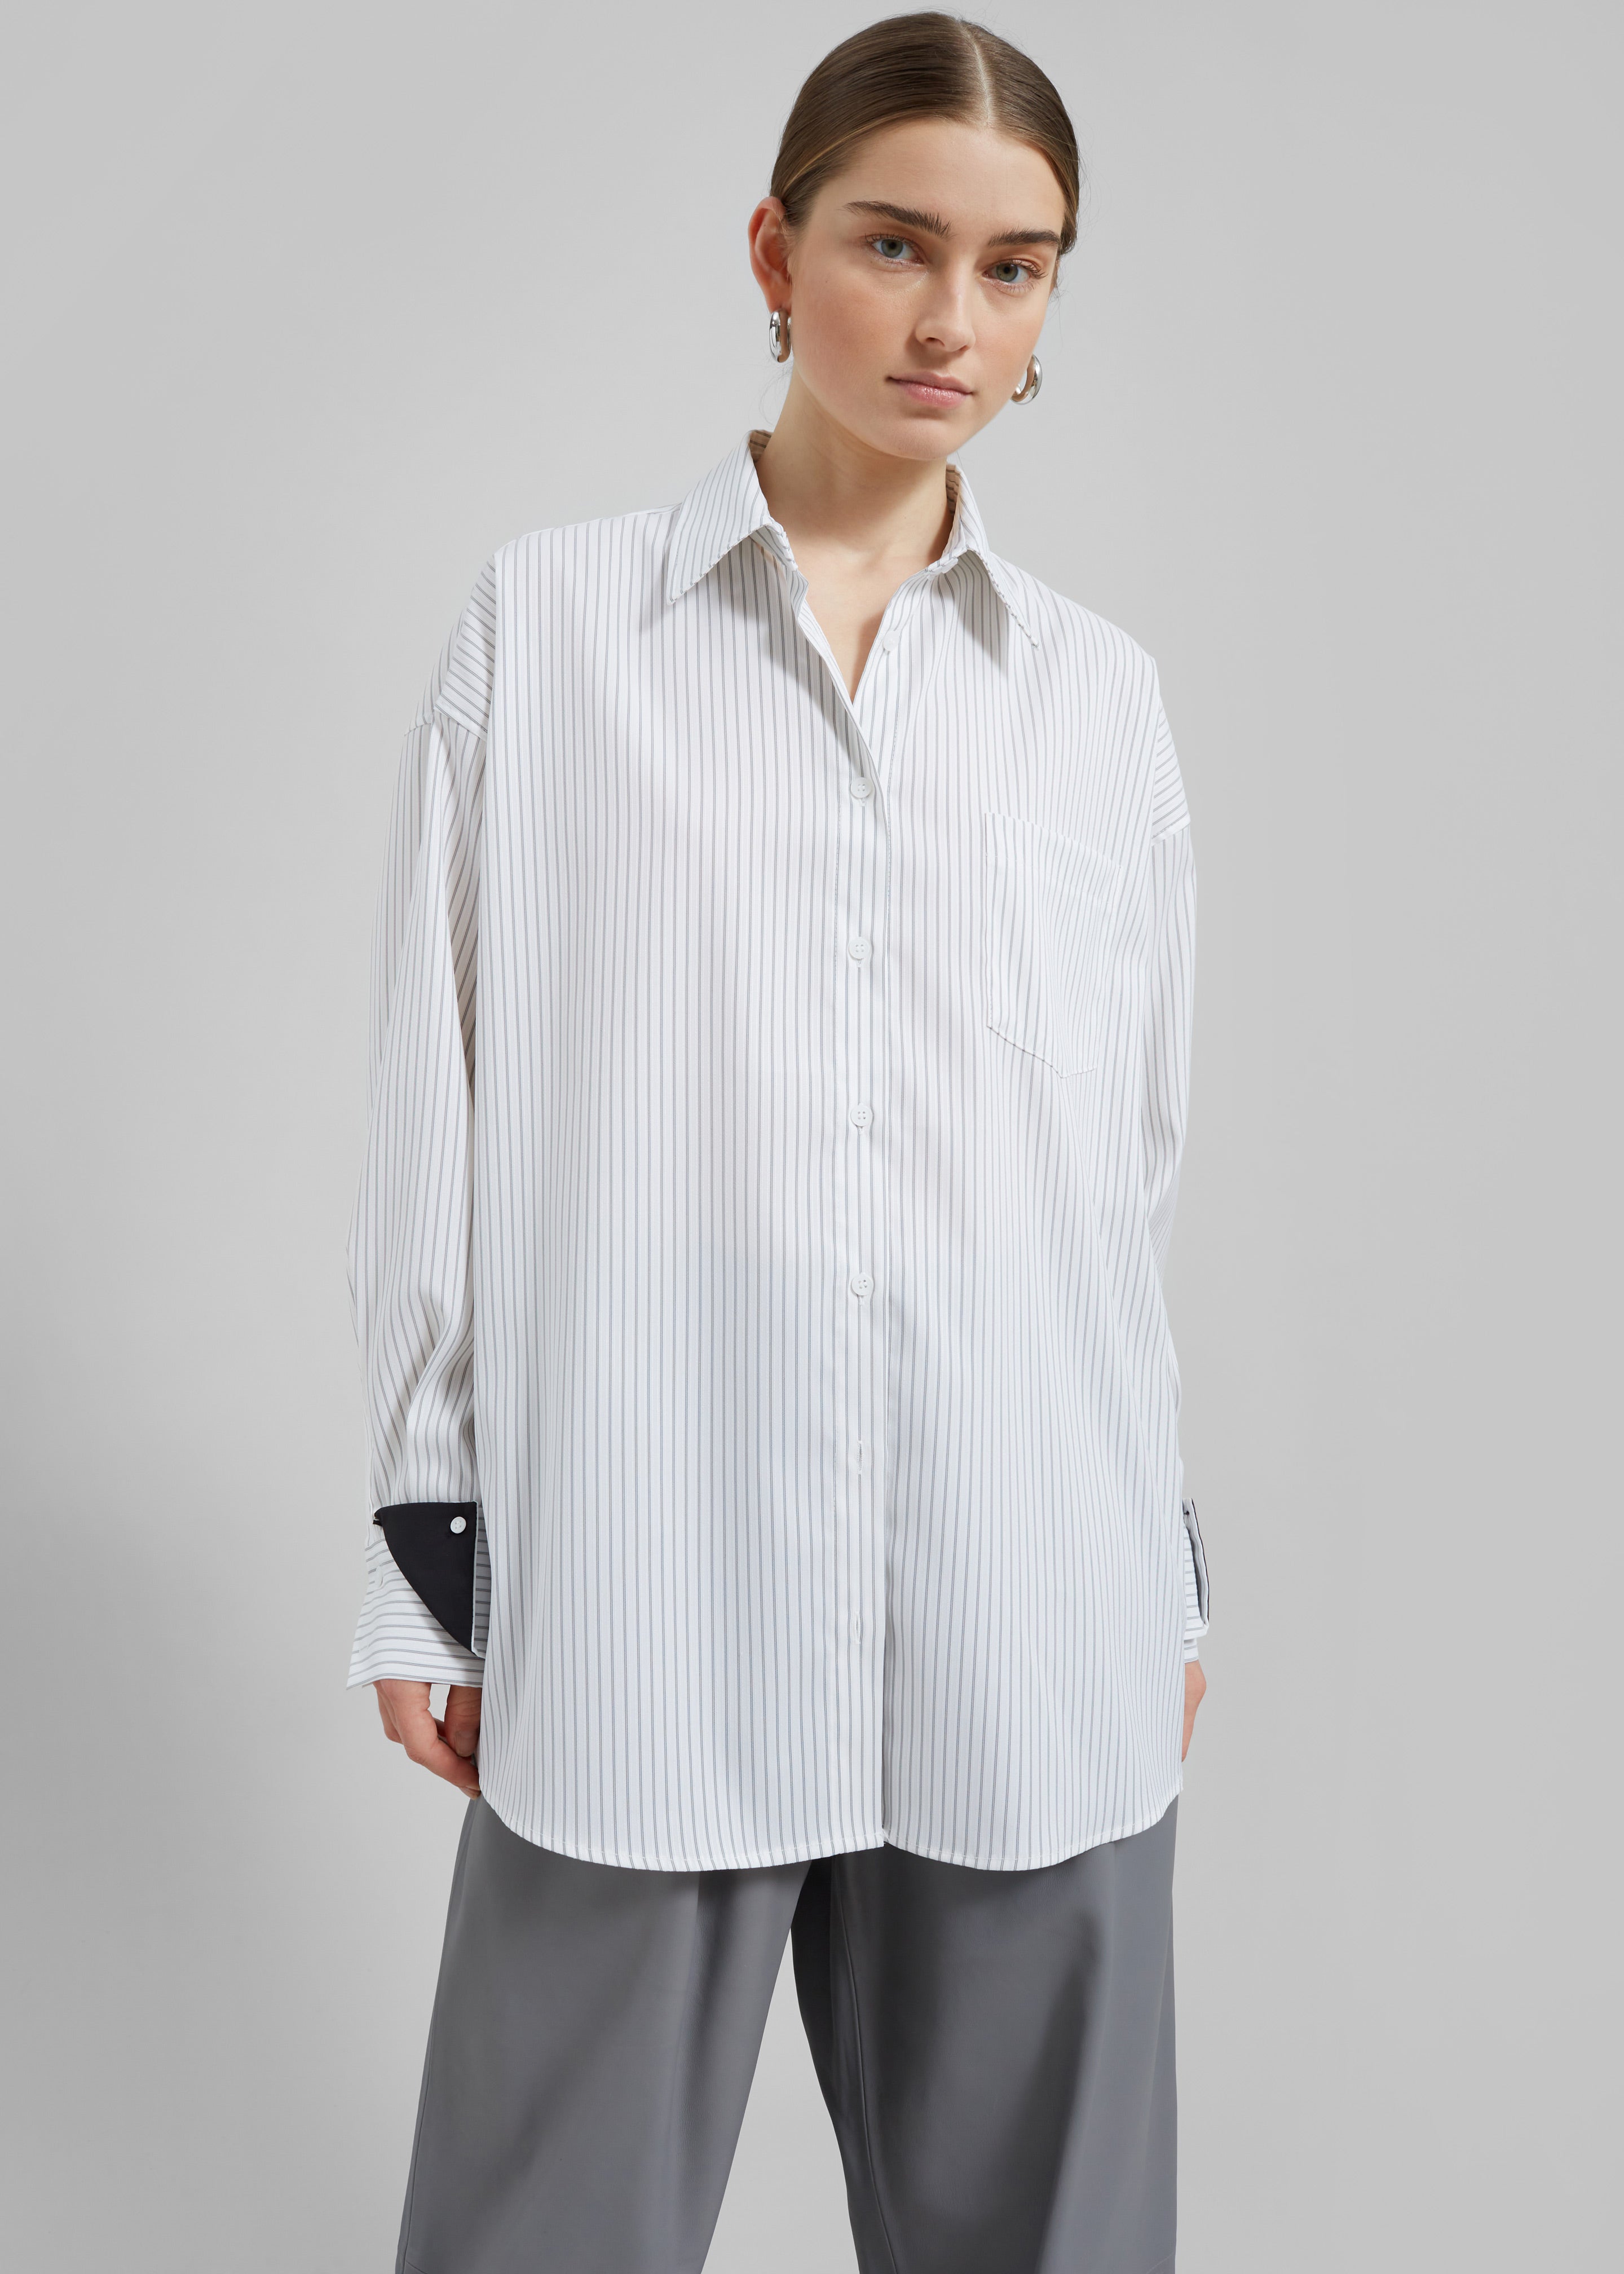 Leona Button Up Shirt - White/Grey Stripe - 4